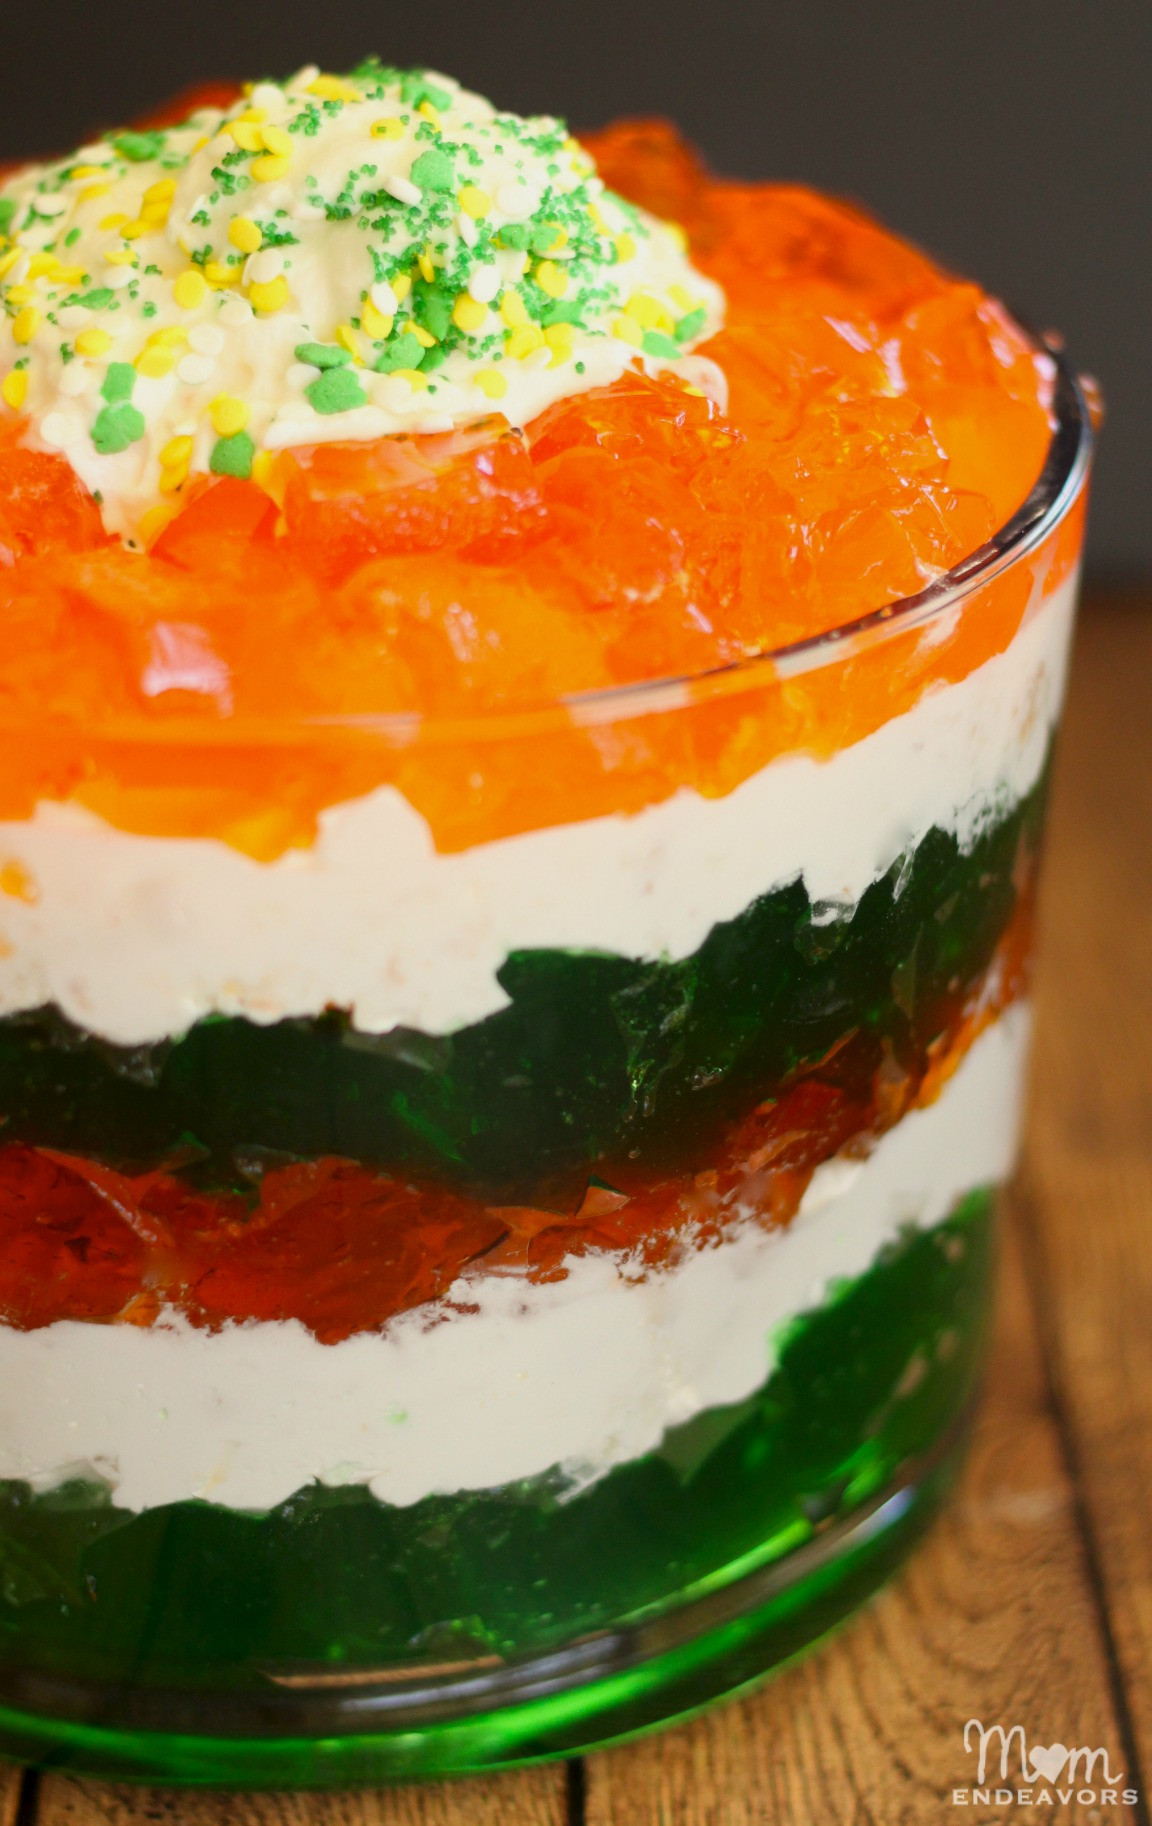 Irish Desserts For Kids
 St Patrick’s Day Dessert Irish Flag Trifle